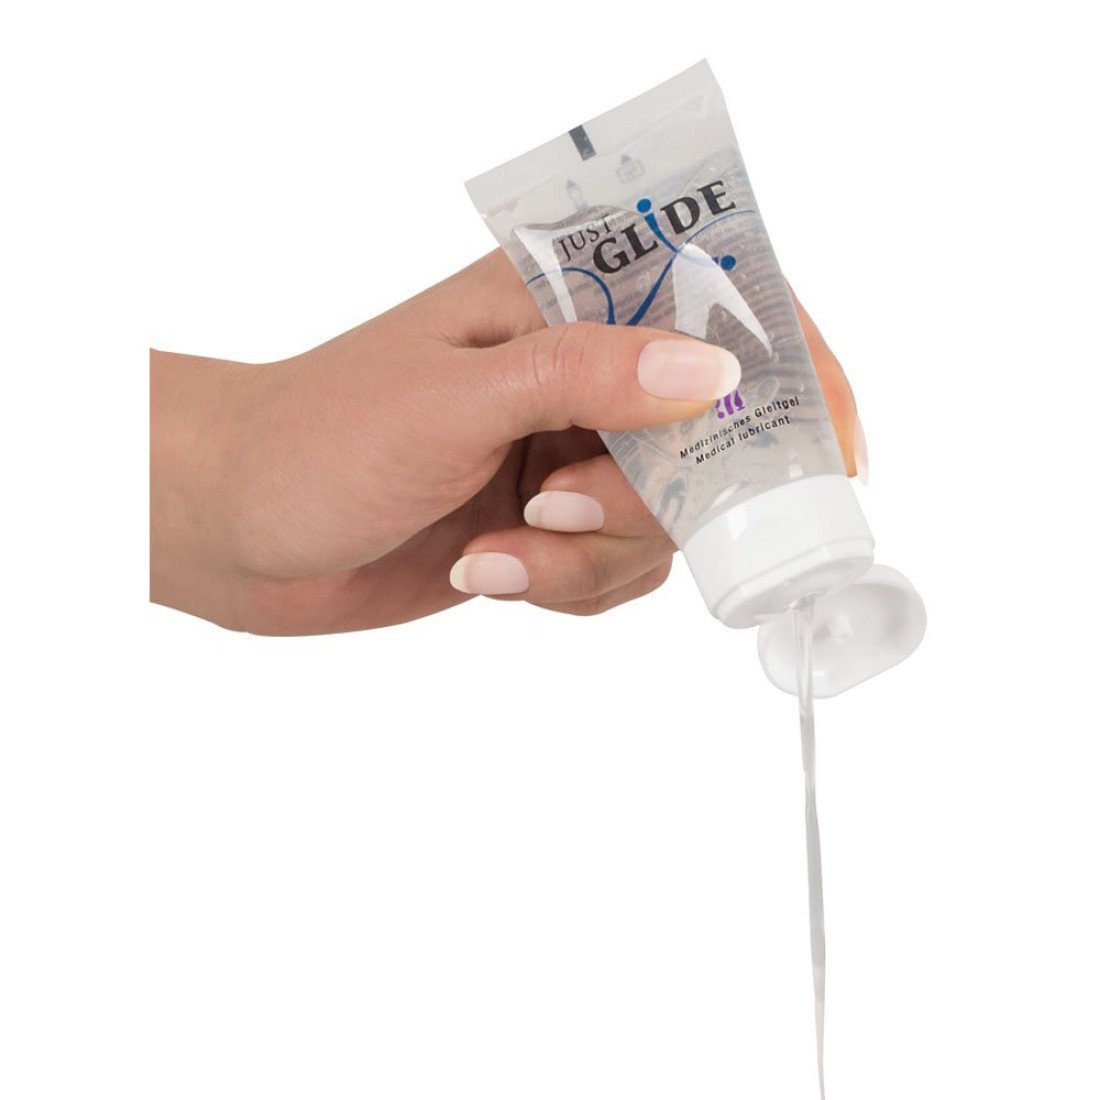 Vandens pagrindo lubrikantas „Toys“, 50 ml - Just Glide